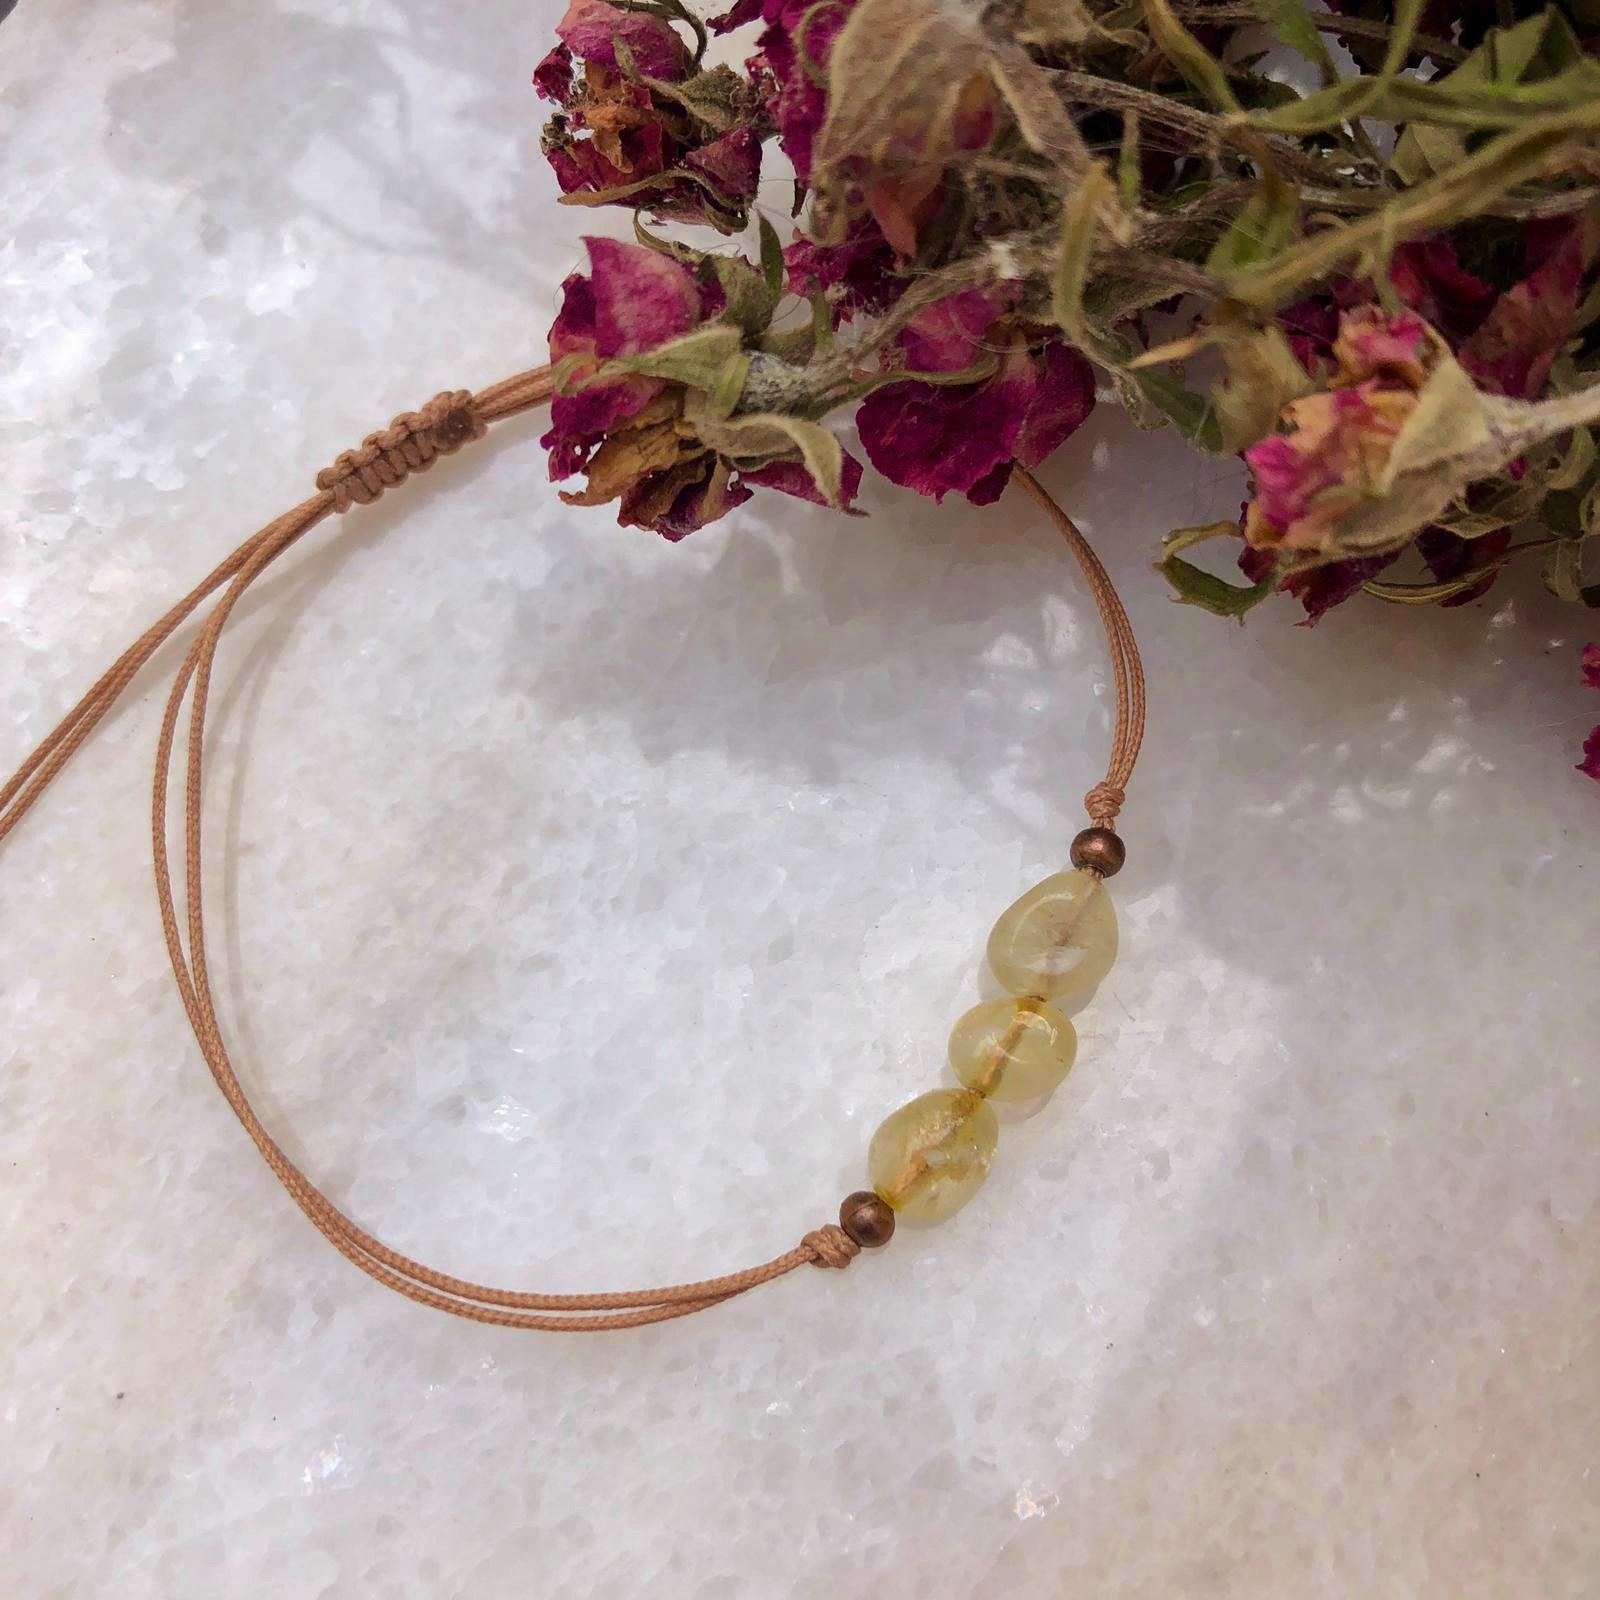 Adjustable Citrine Bracelet - November Birthstone Jewelry from BeachPerfect.de